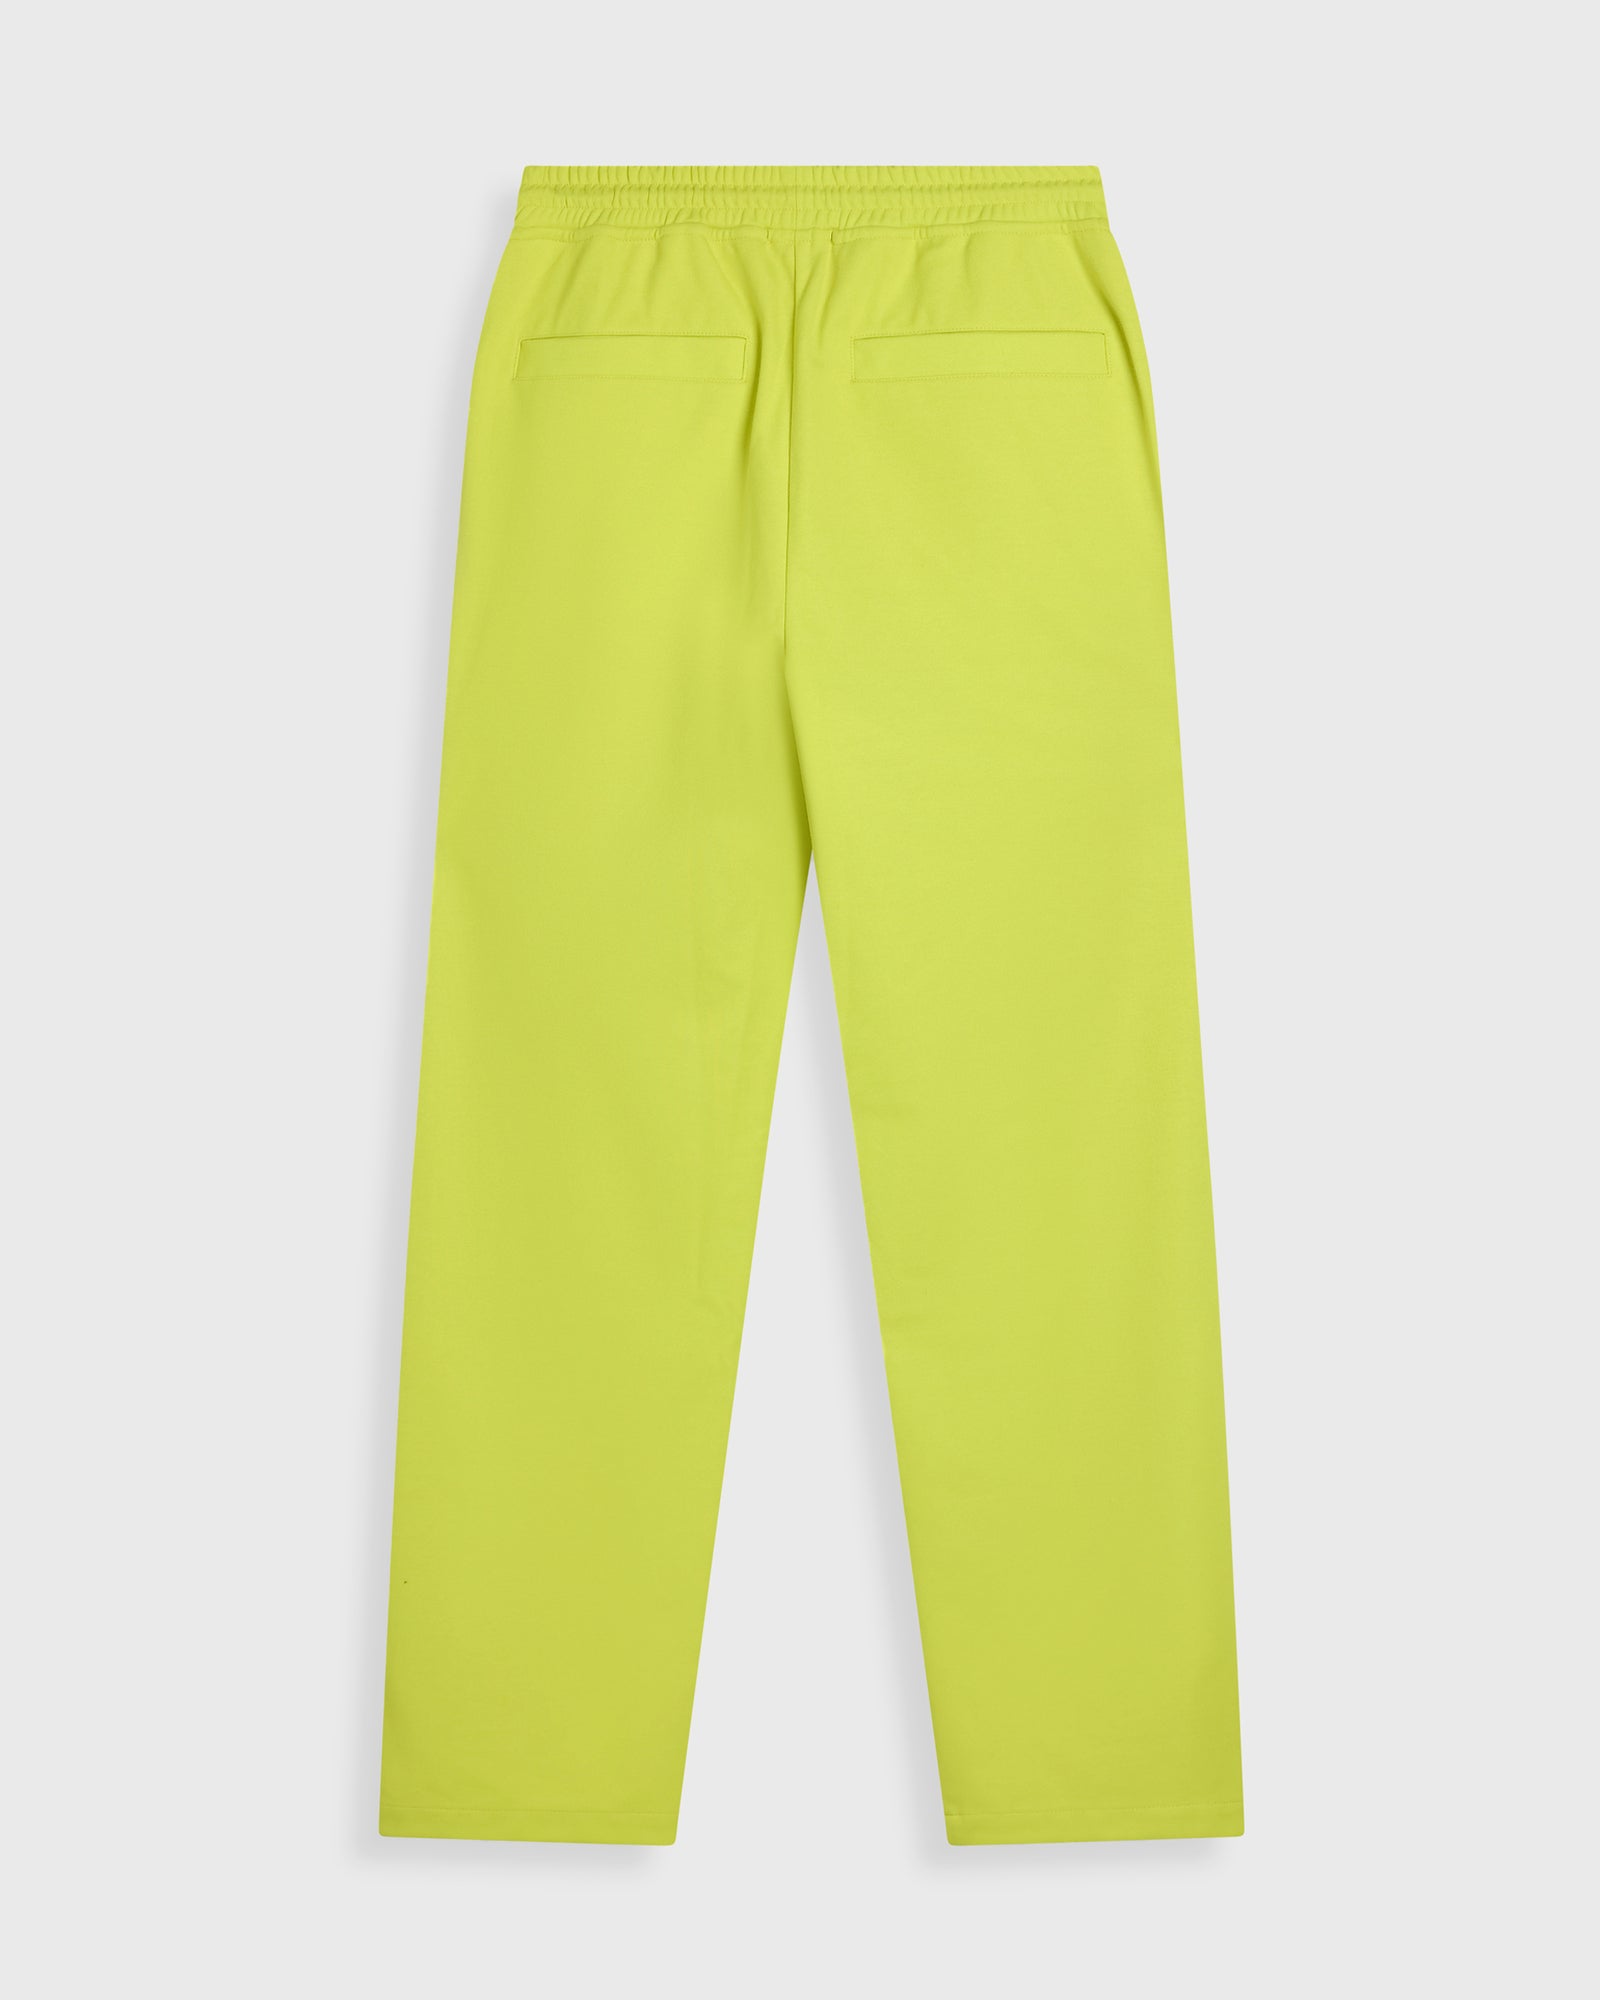 Bright neon yellow hardware deco track pants